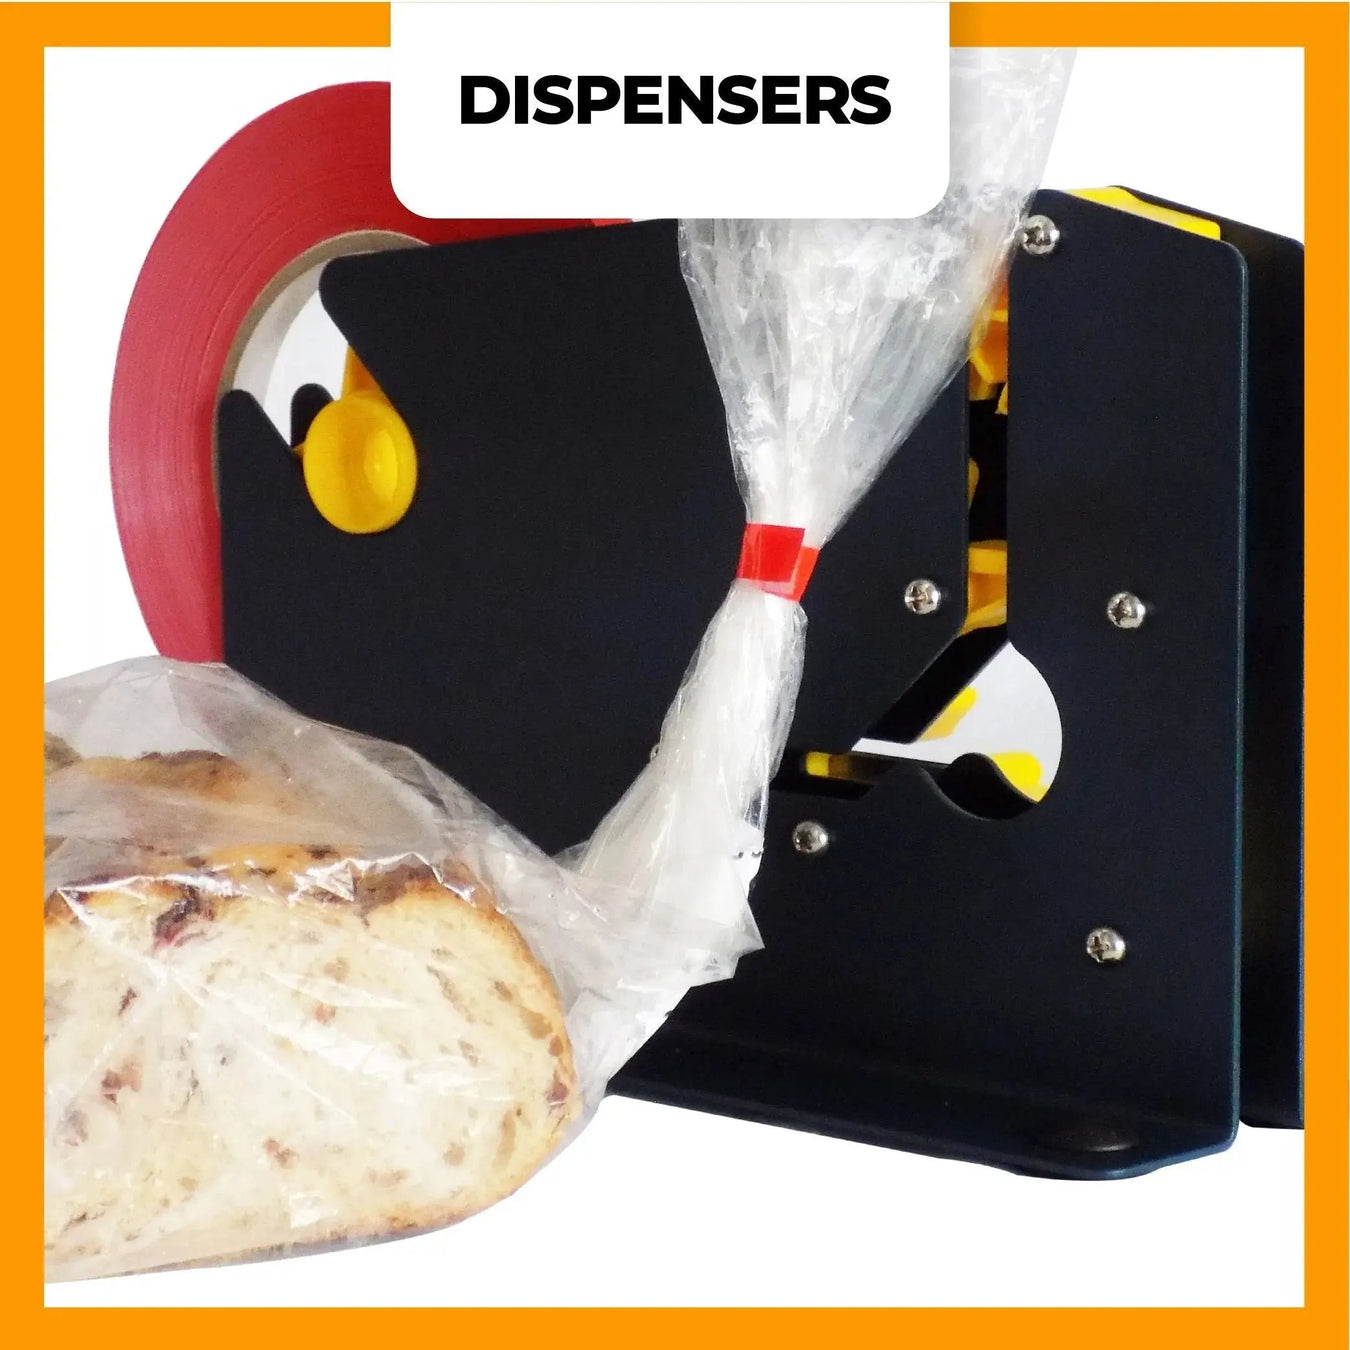 Dispensers - Tape Providers